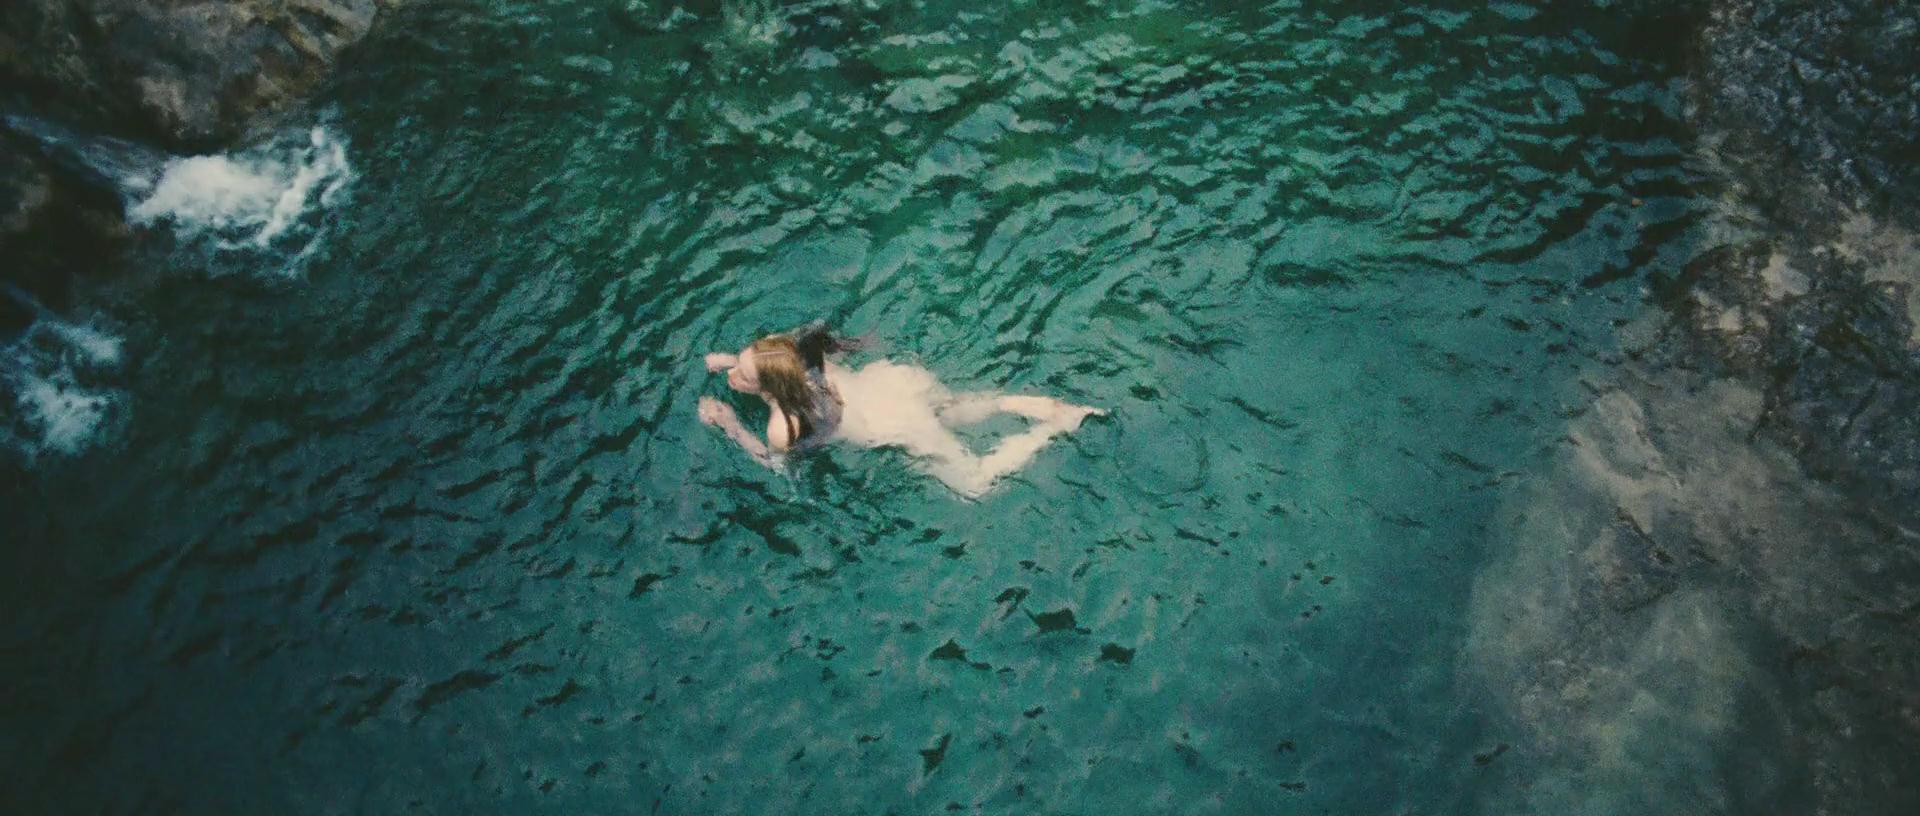 Sophie Lowe nude pics.